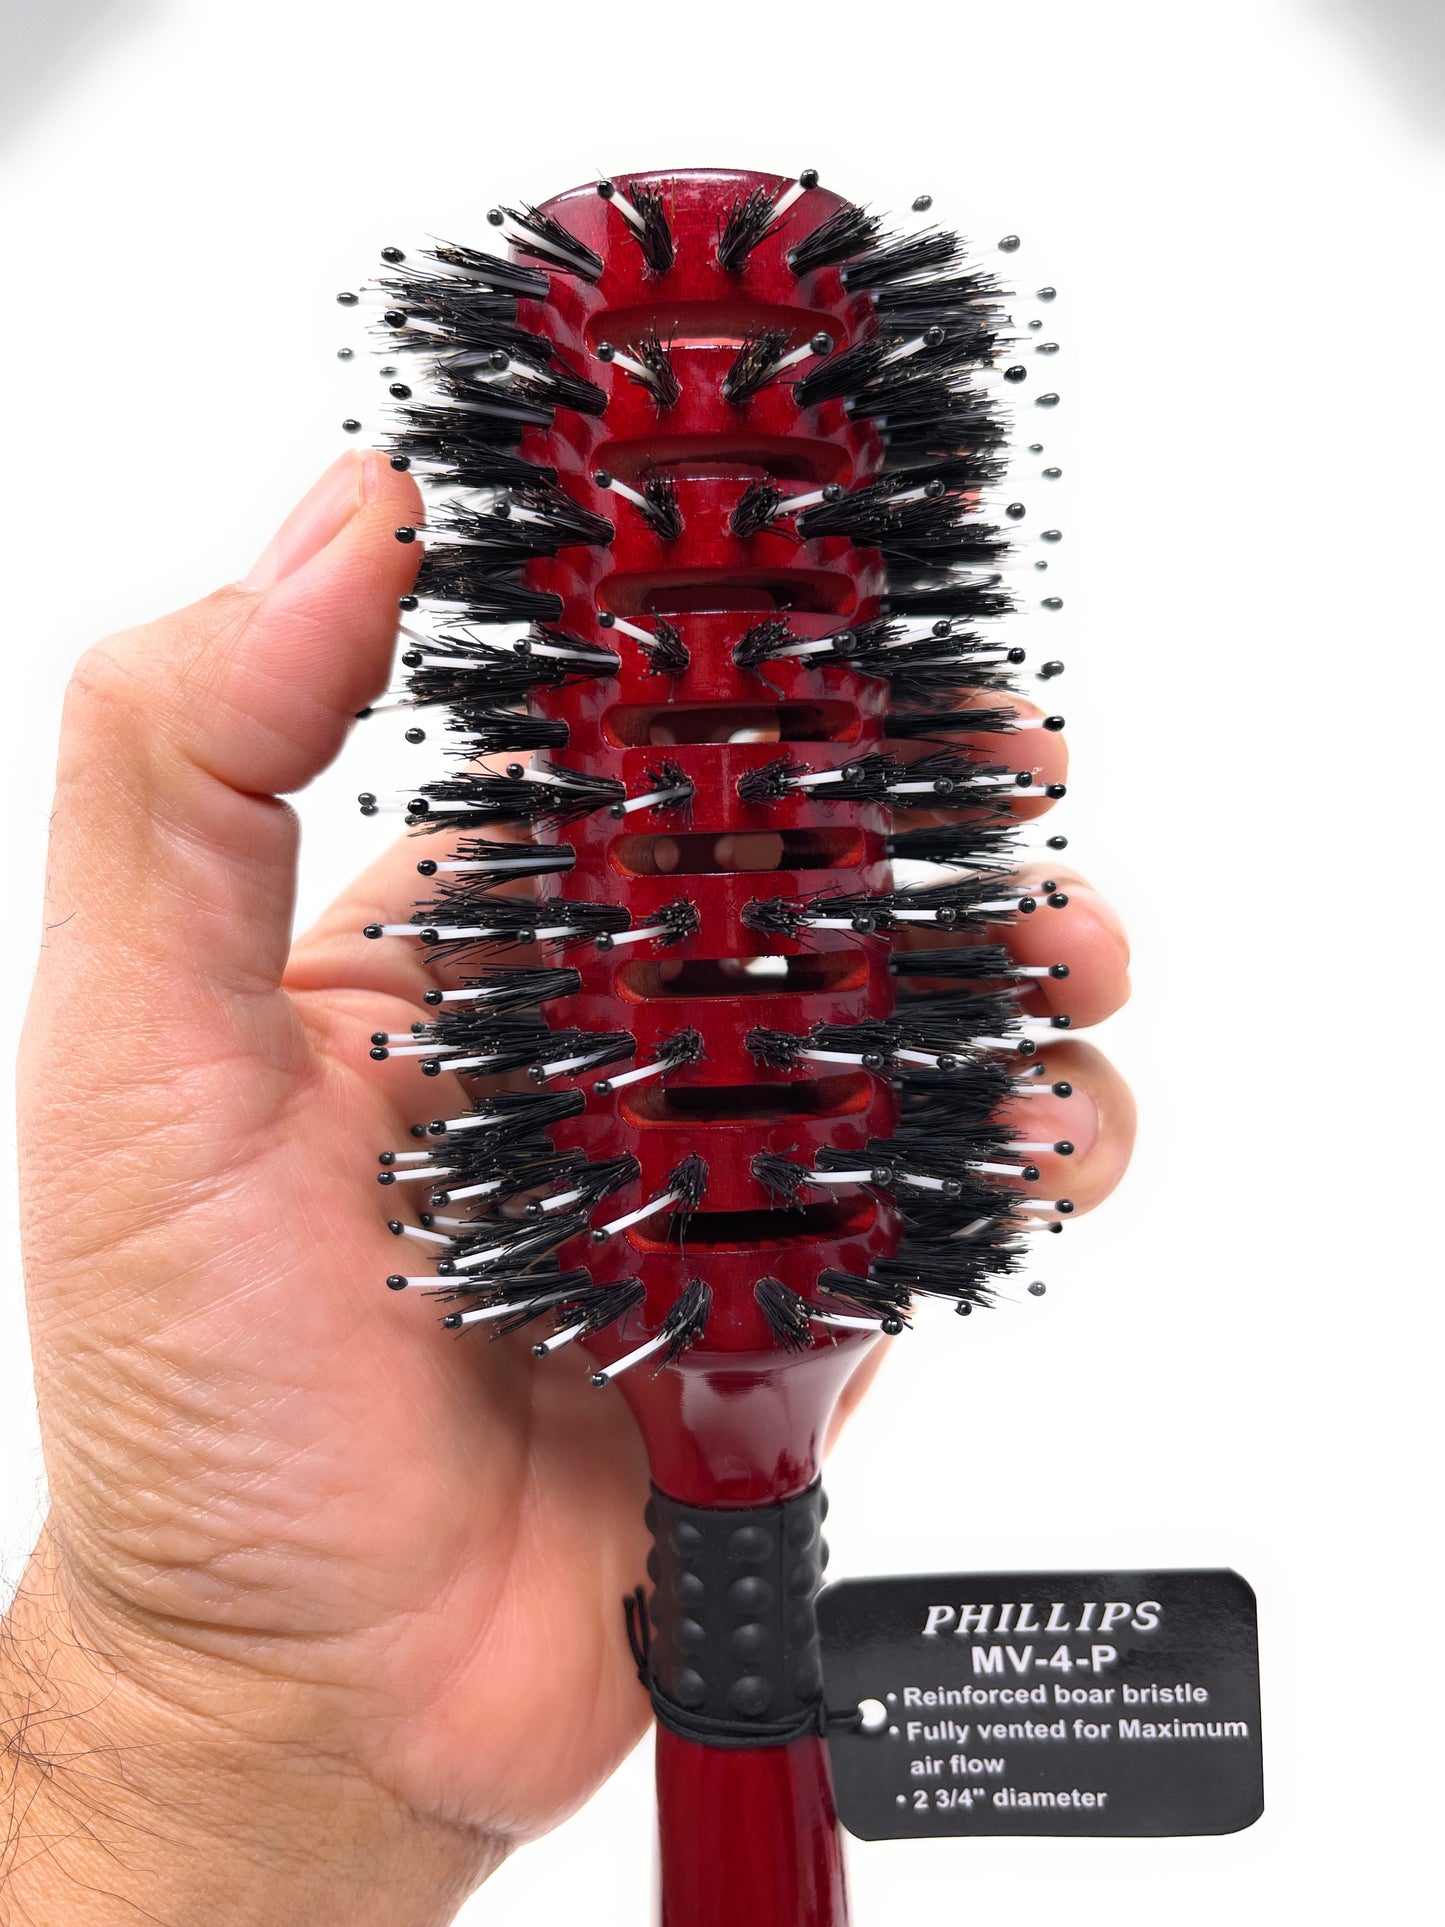 Phillips Brush Vent Barrel Reinforced Polytipped Bristle Wood Handle Hair Dry Brush 1 Pc. MV-4-P